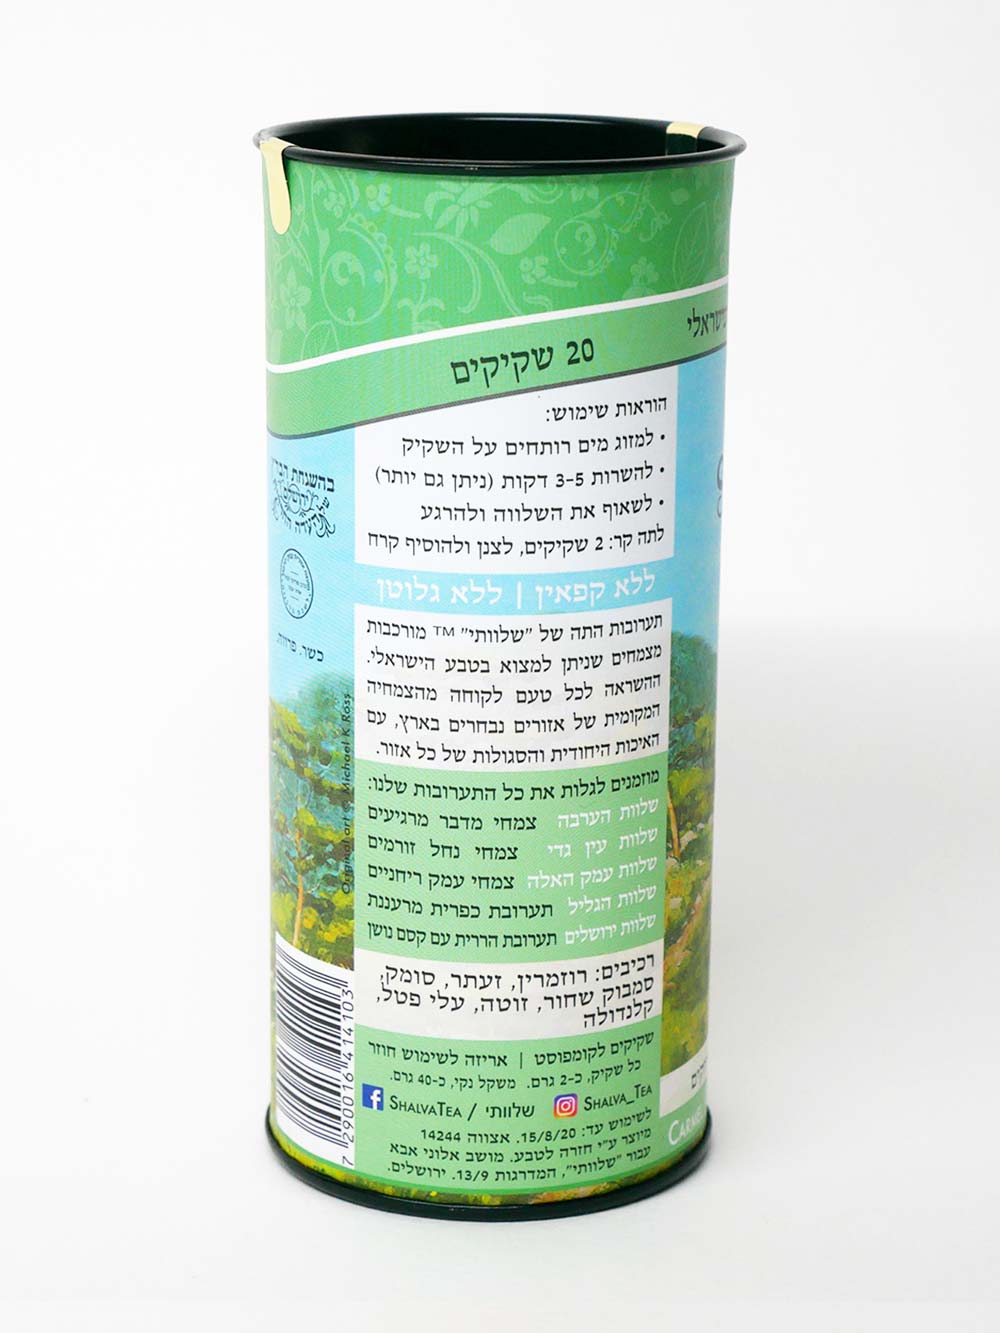 Rejuvenating Za'atar-Rosemary | Carmel Blend (20 Teabags) - ShalvaTea Kosher Israeli Herbal Teas